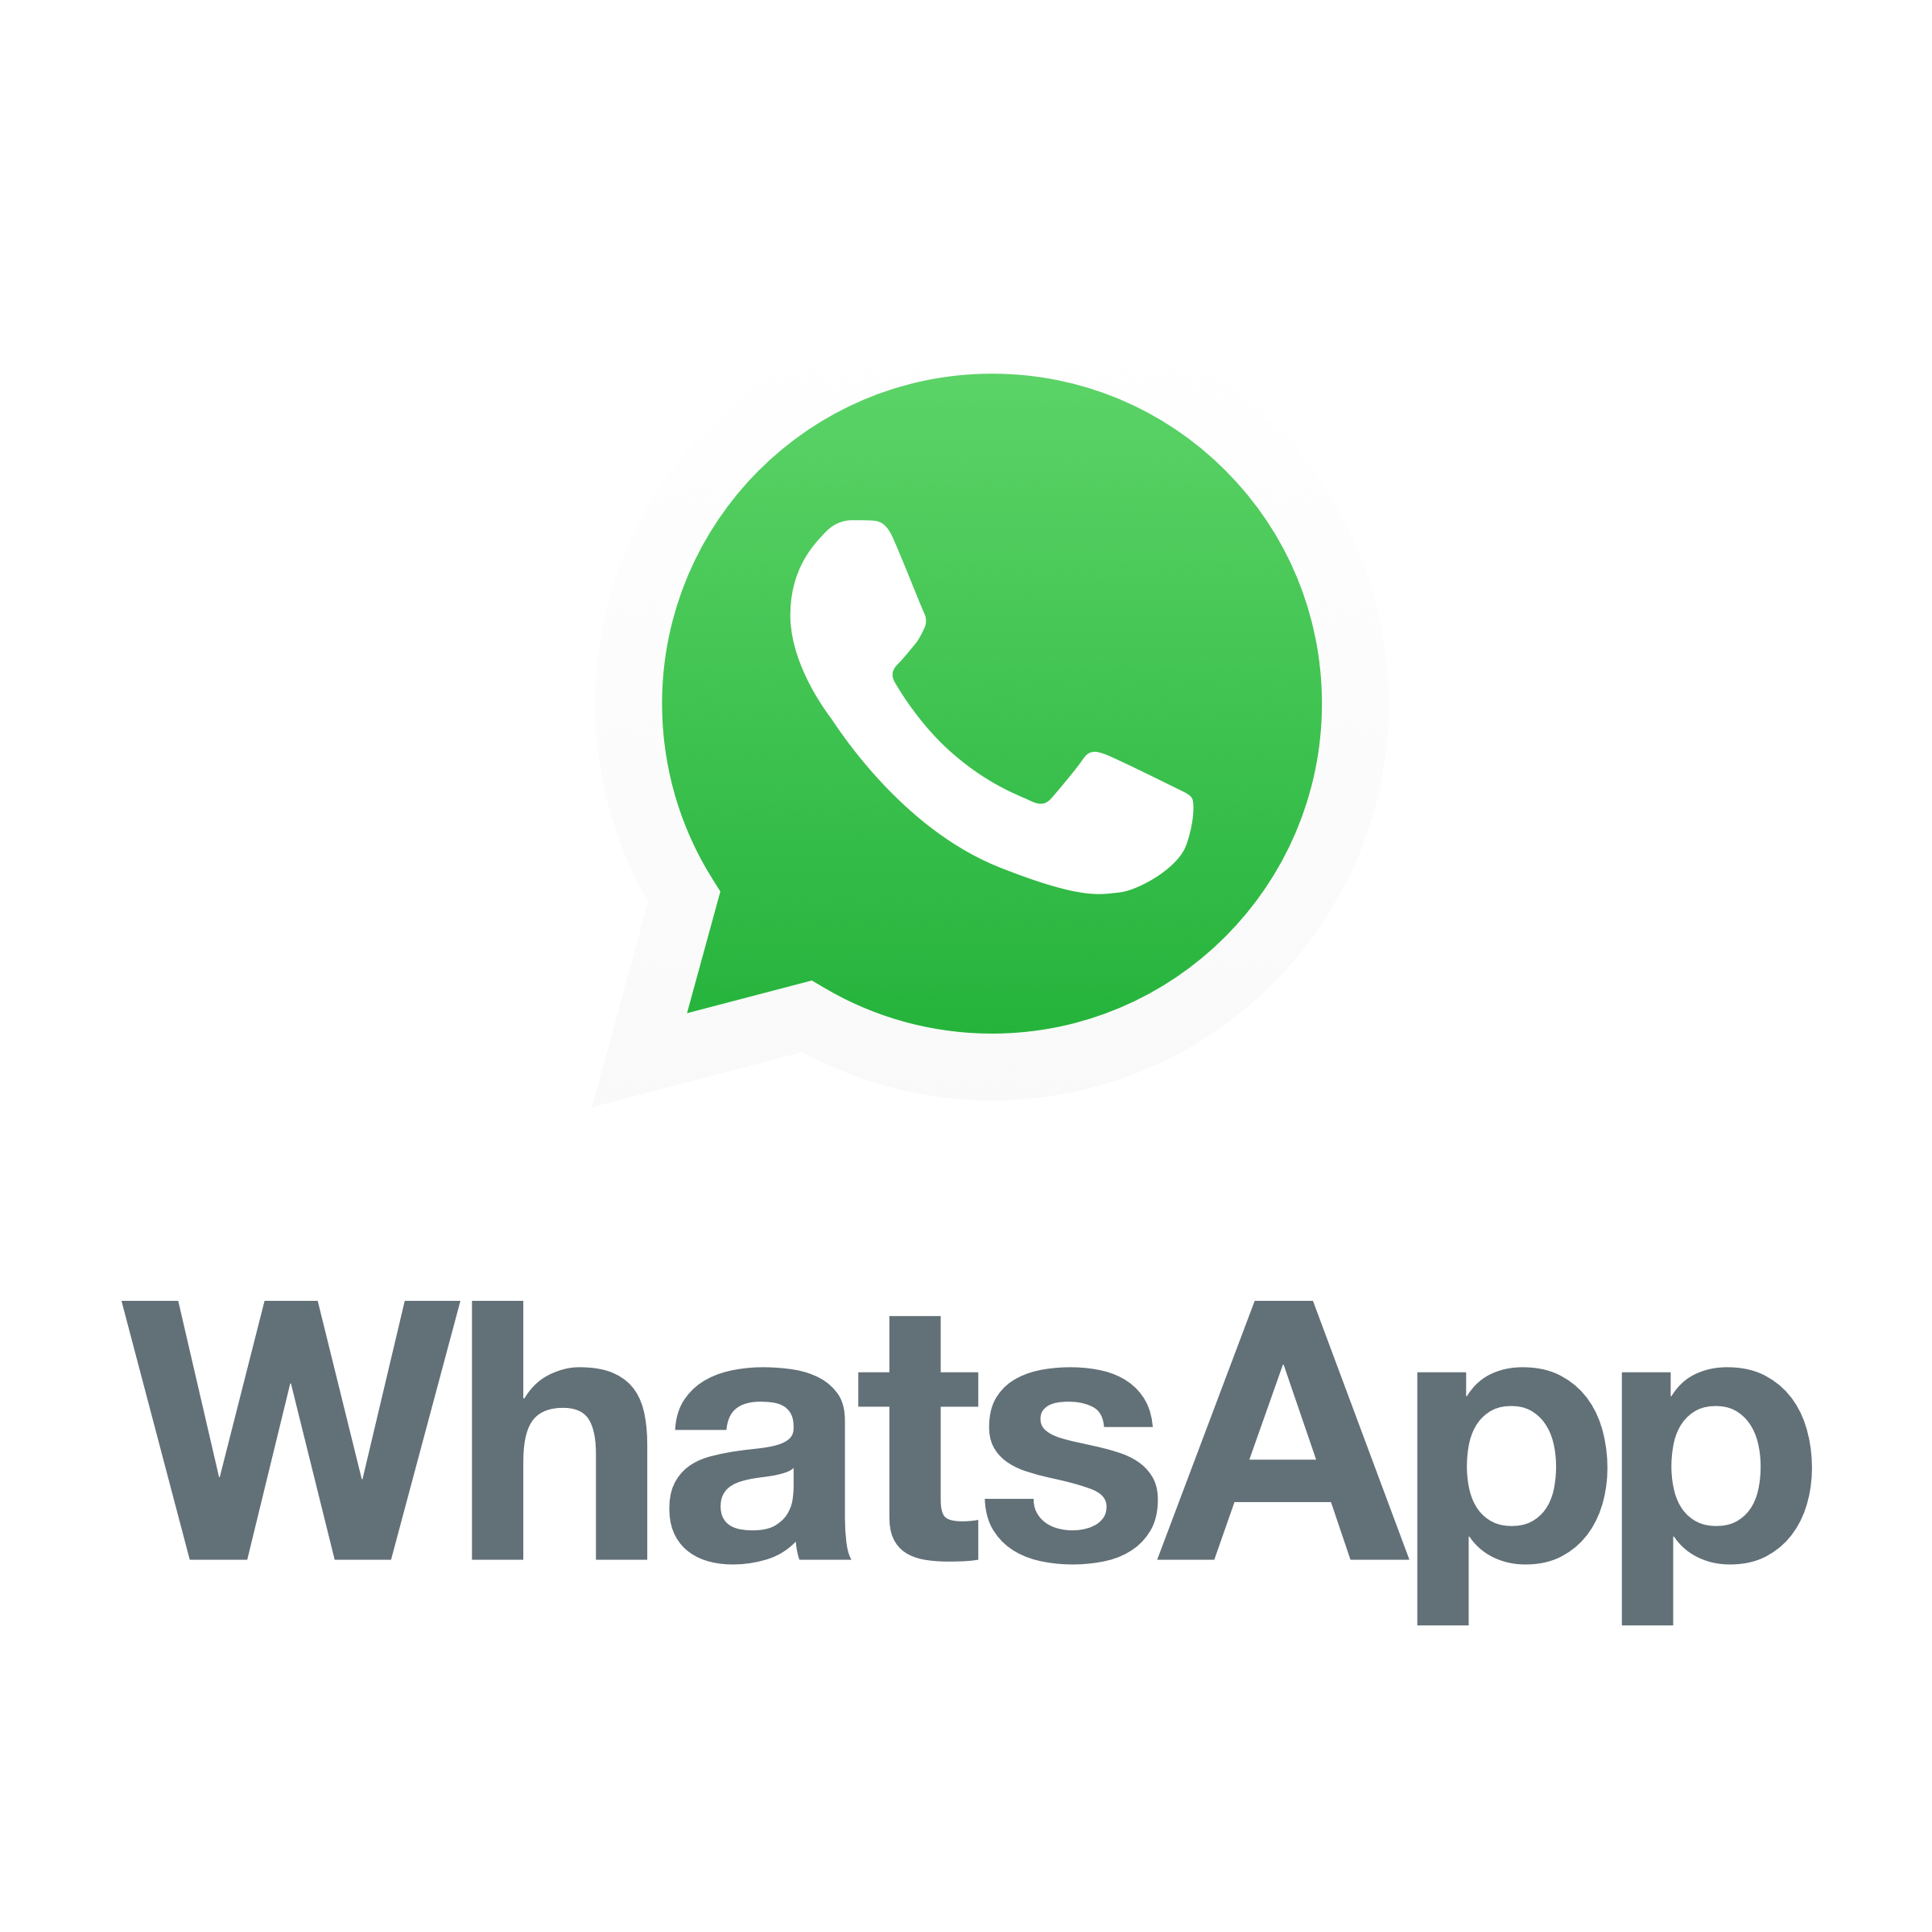 Whatsapp Logo - WhatsApp Logo PNG Transparent & SVG Vector - Freebie Supply